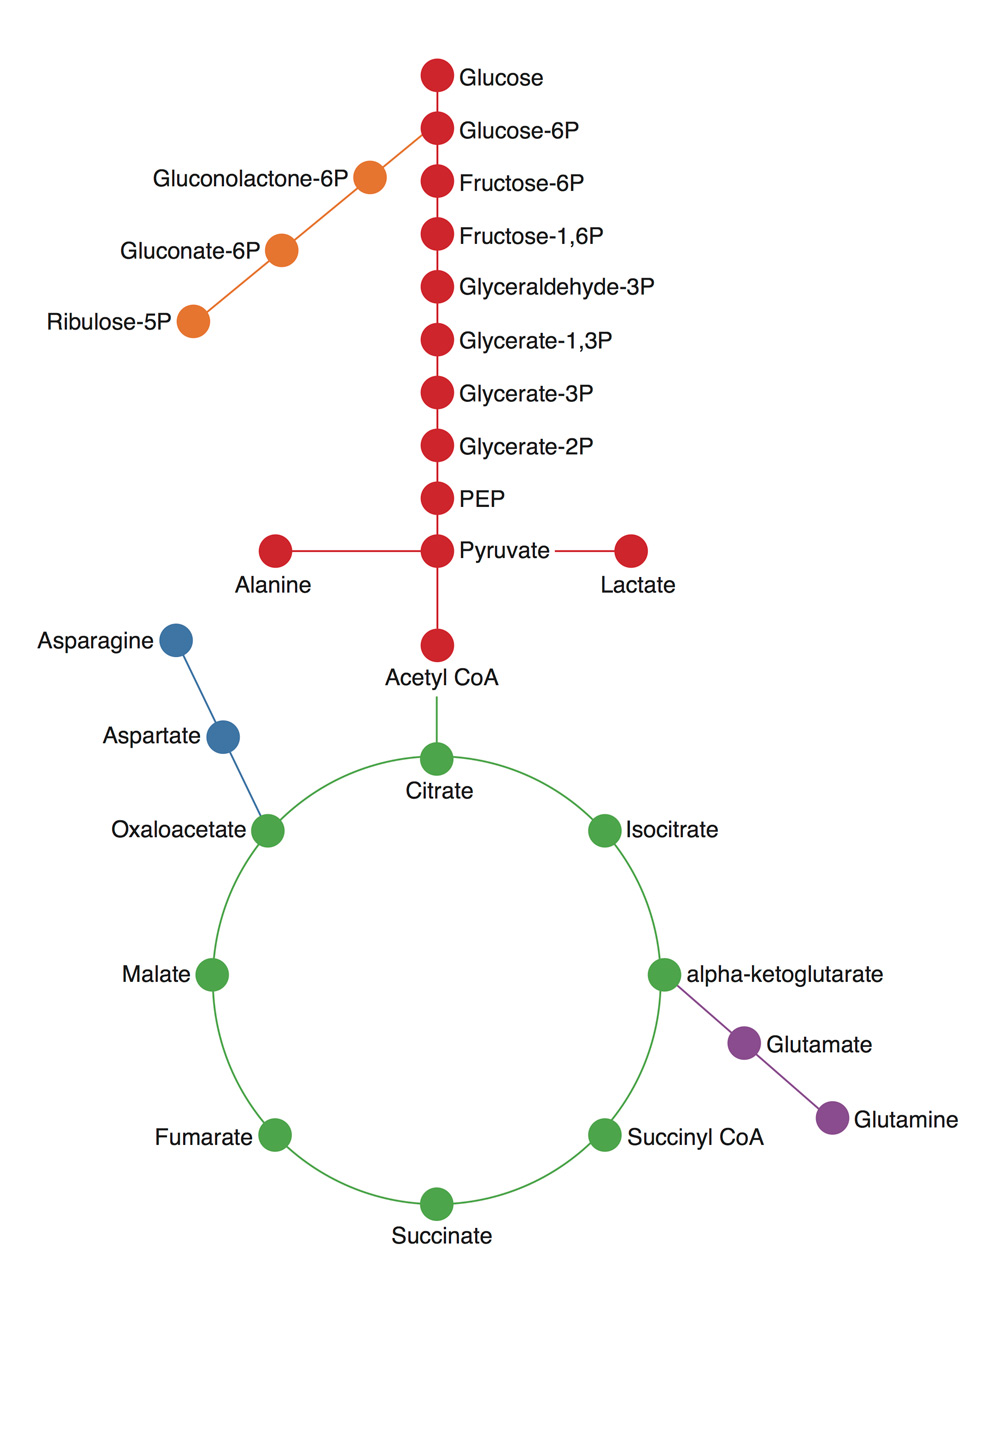 Diagram showing a metabolism pathway